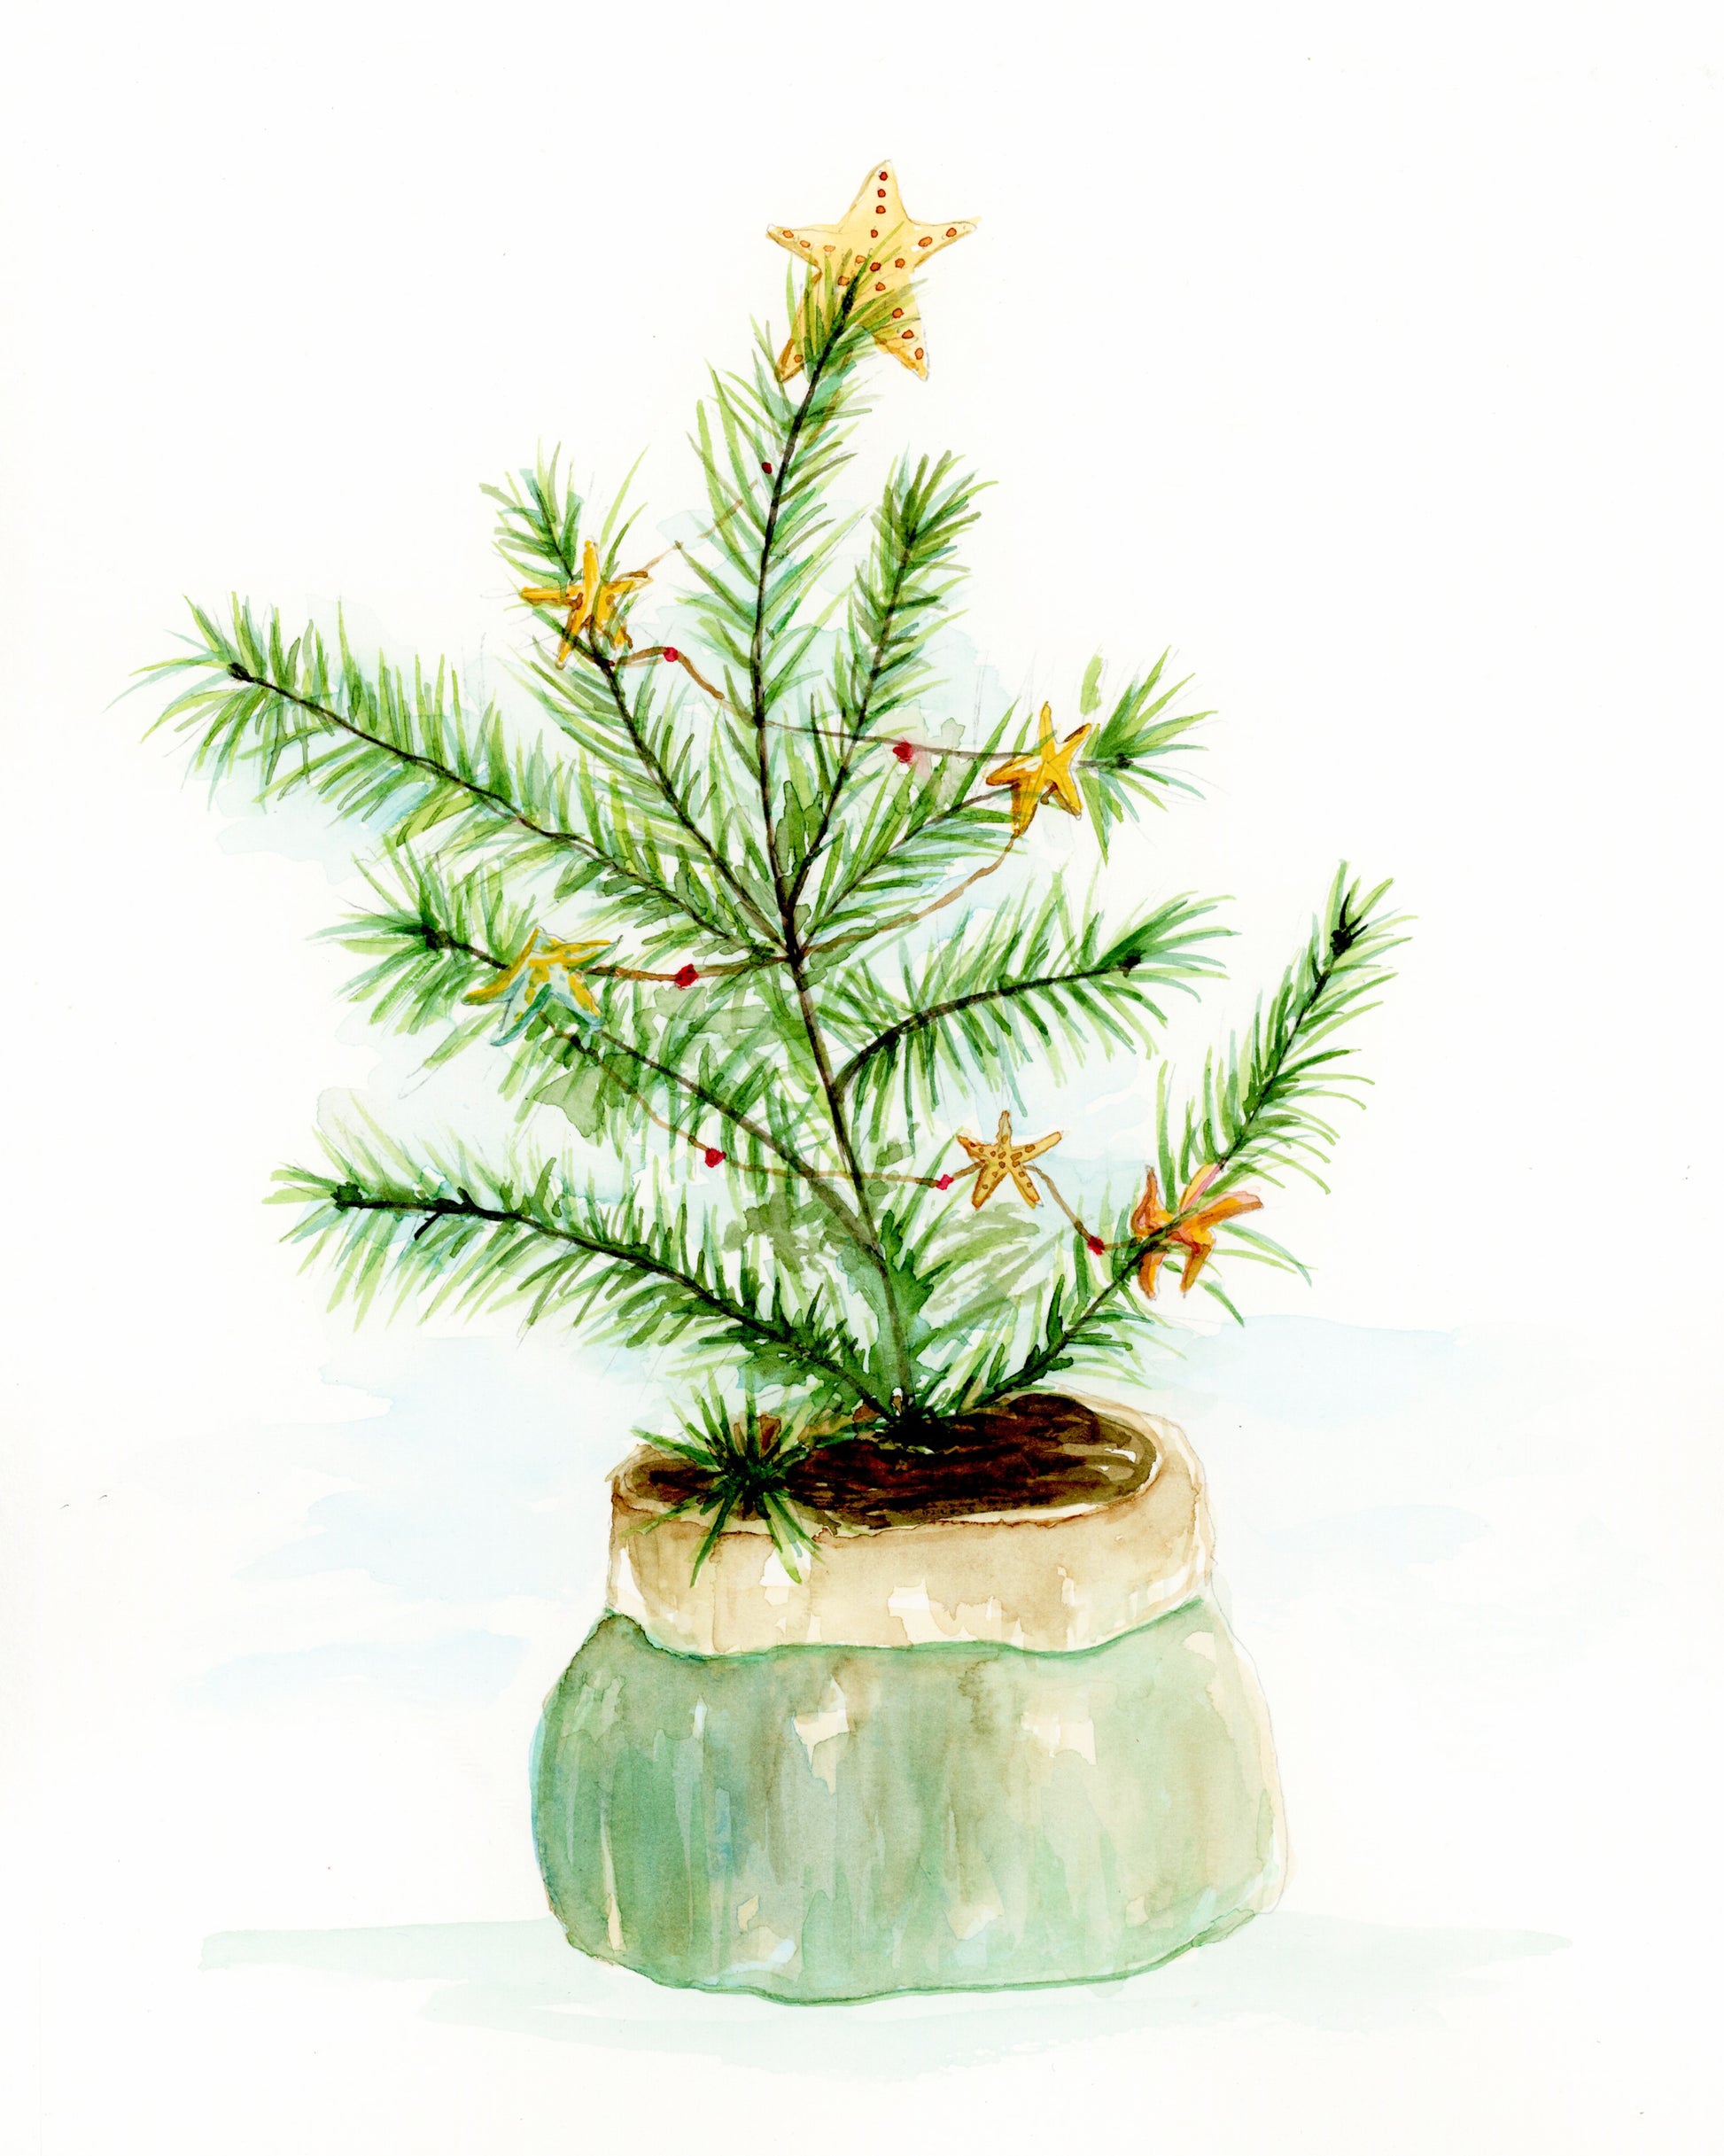 Christmas Tree Watercolor Print - Flamingo Shores - Original Art for Home Decor and Gifts